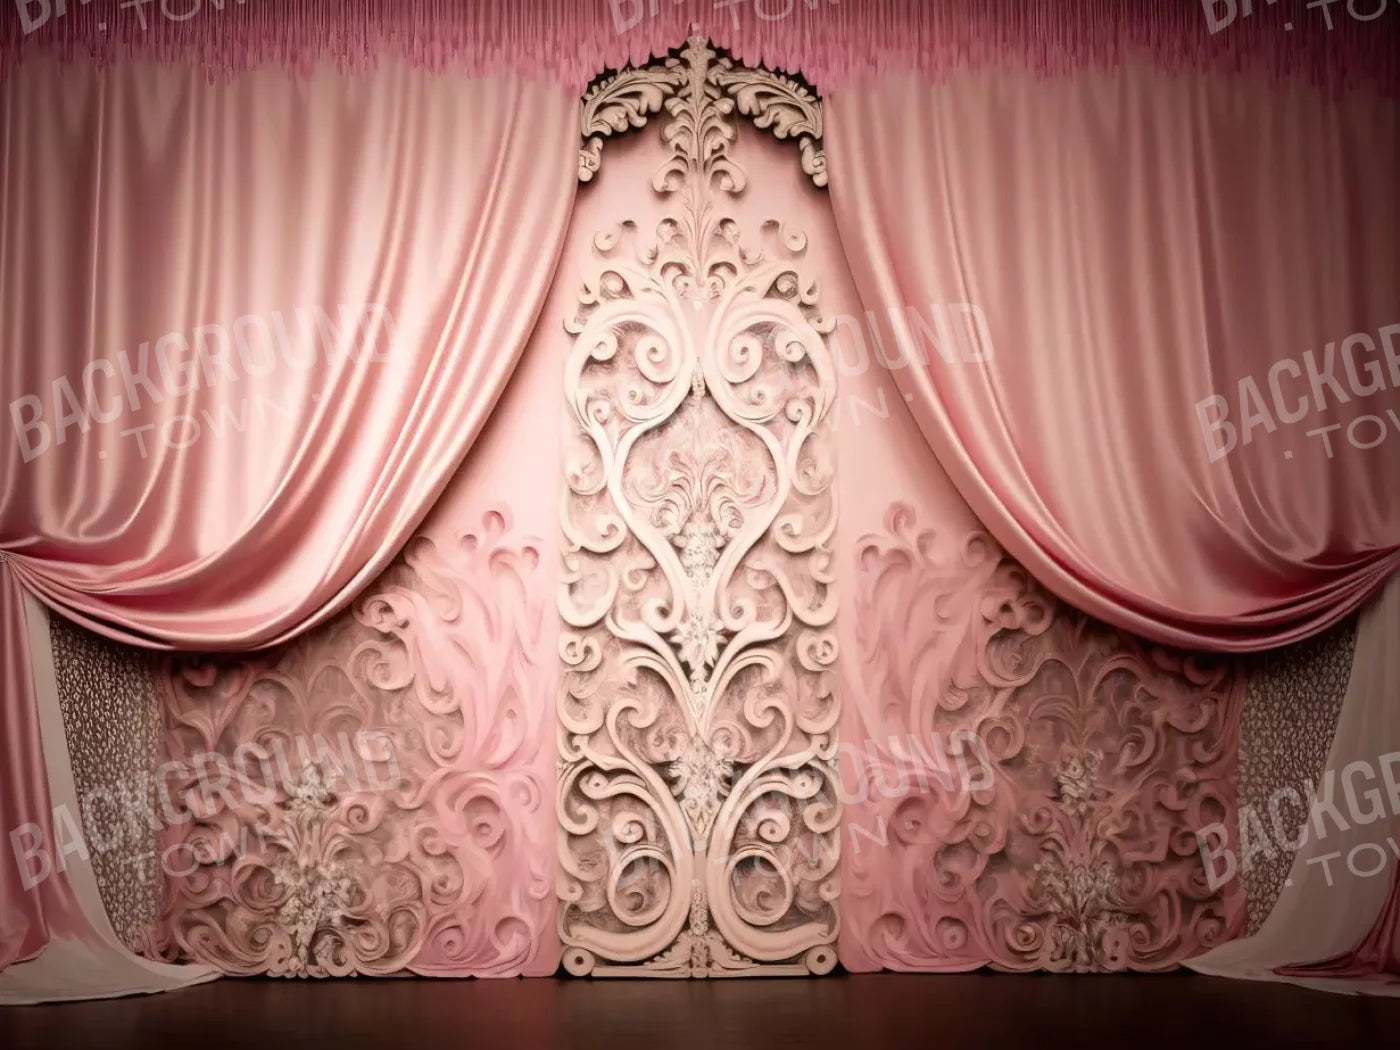 Doll House Curtains Iii 8’X6’ Fleece (96 X 72 Inch) Backdrop